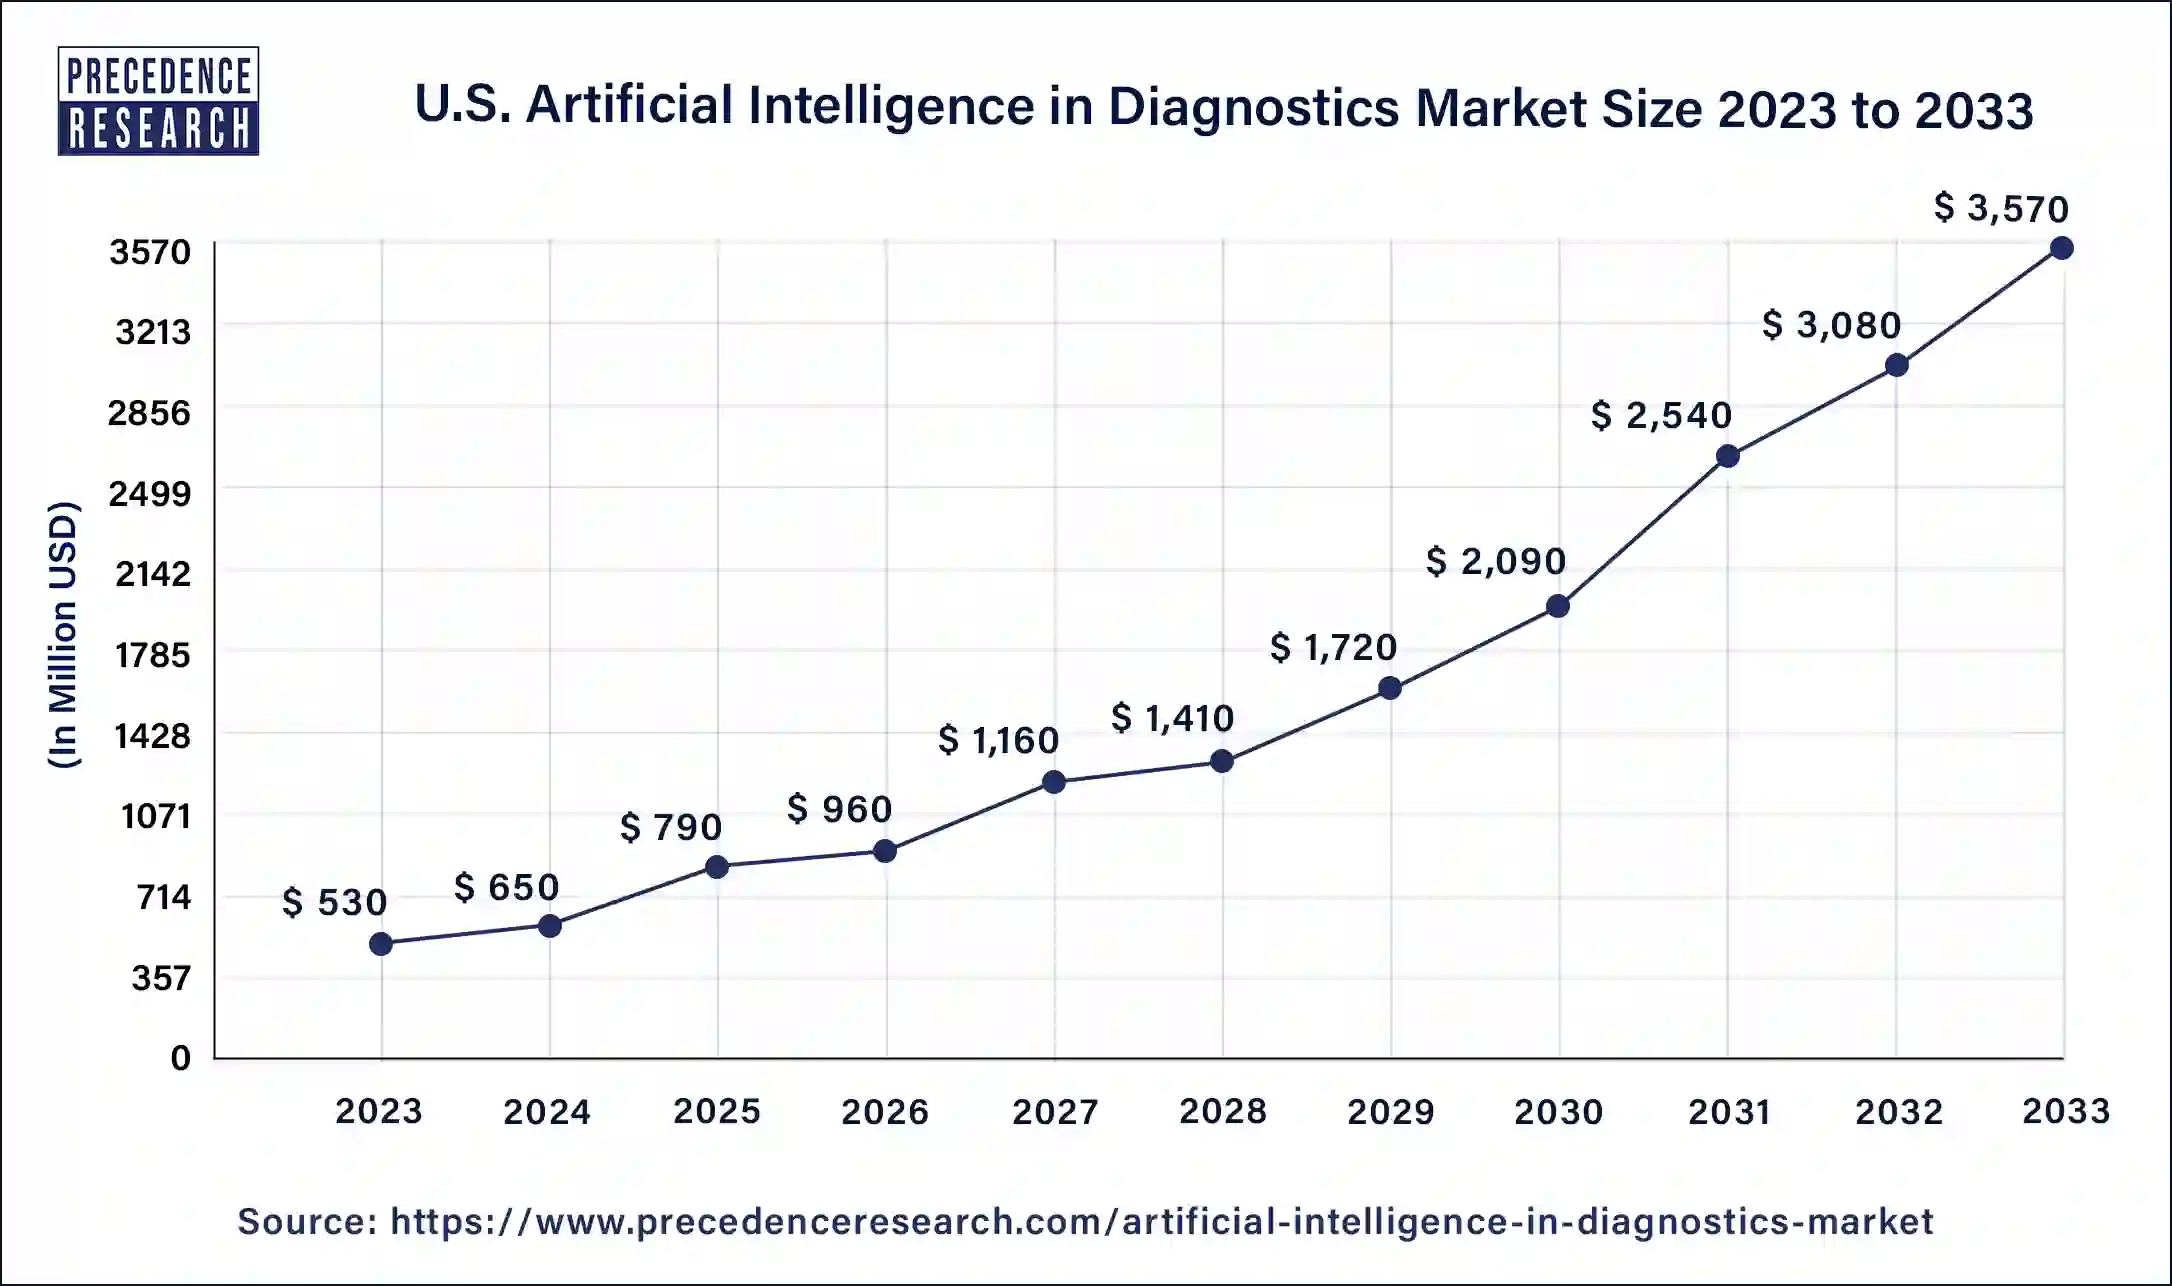 U.S. Artificial Intelligence in Diagnostics Market Size 2024 To 2033